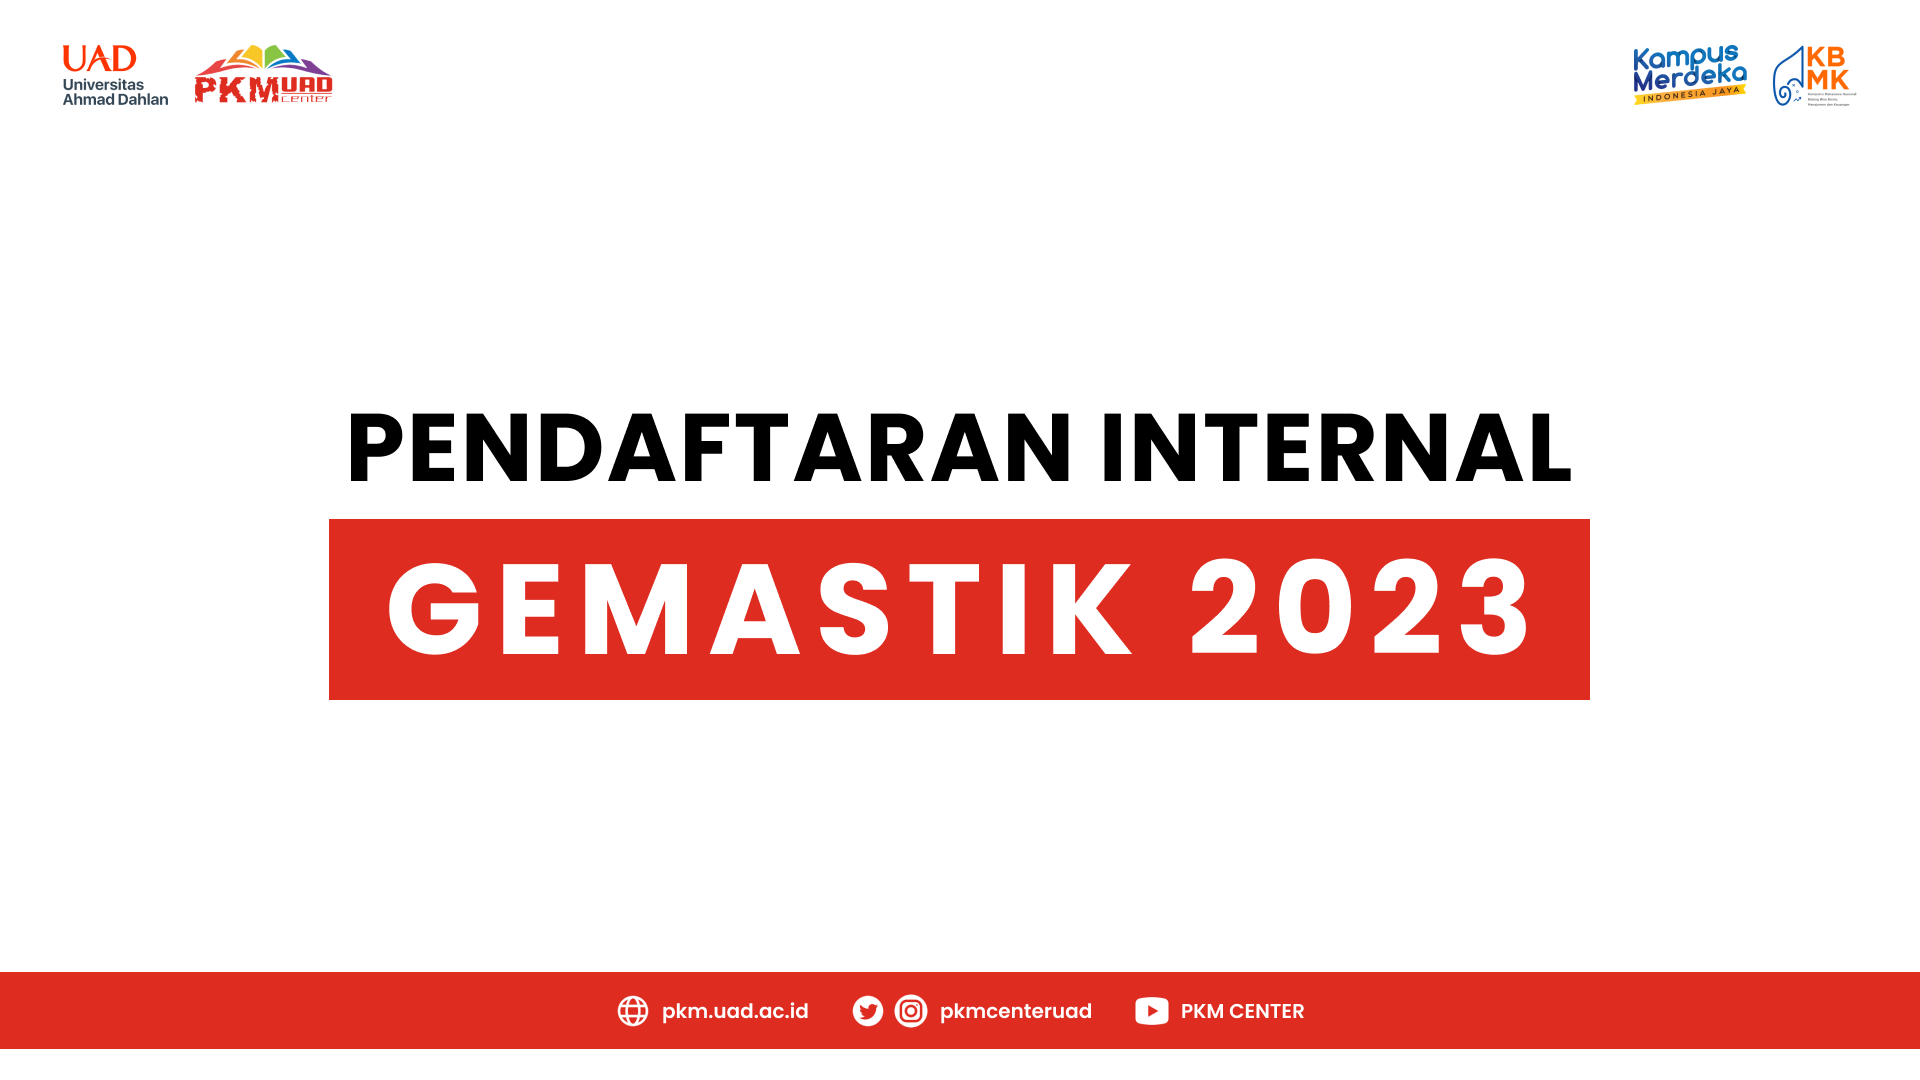 Pendaftaran Internal GEMASTIK 2023 UAD